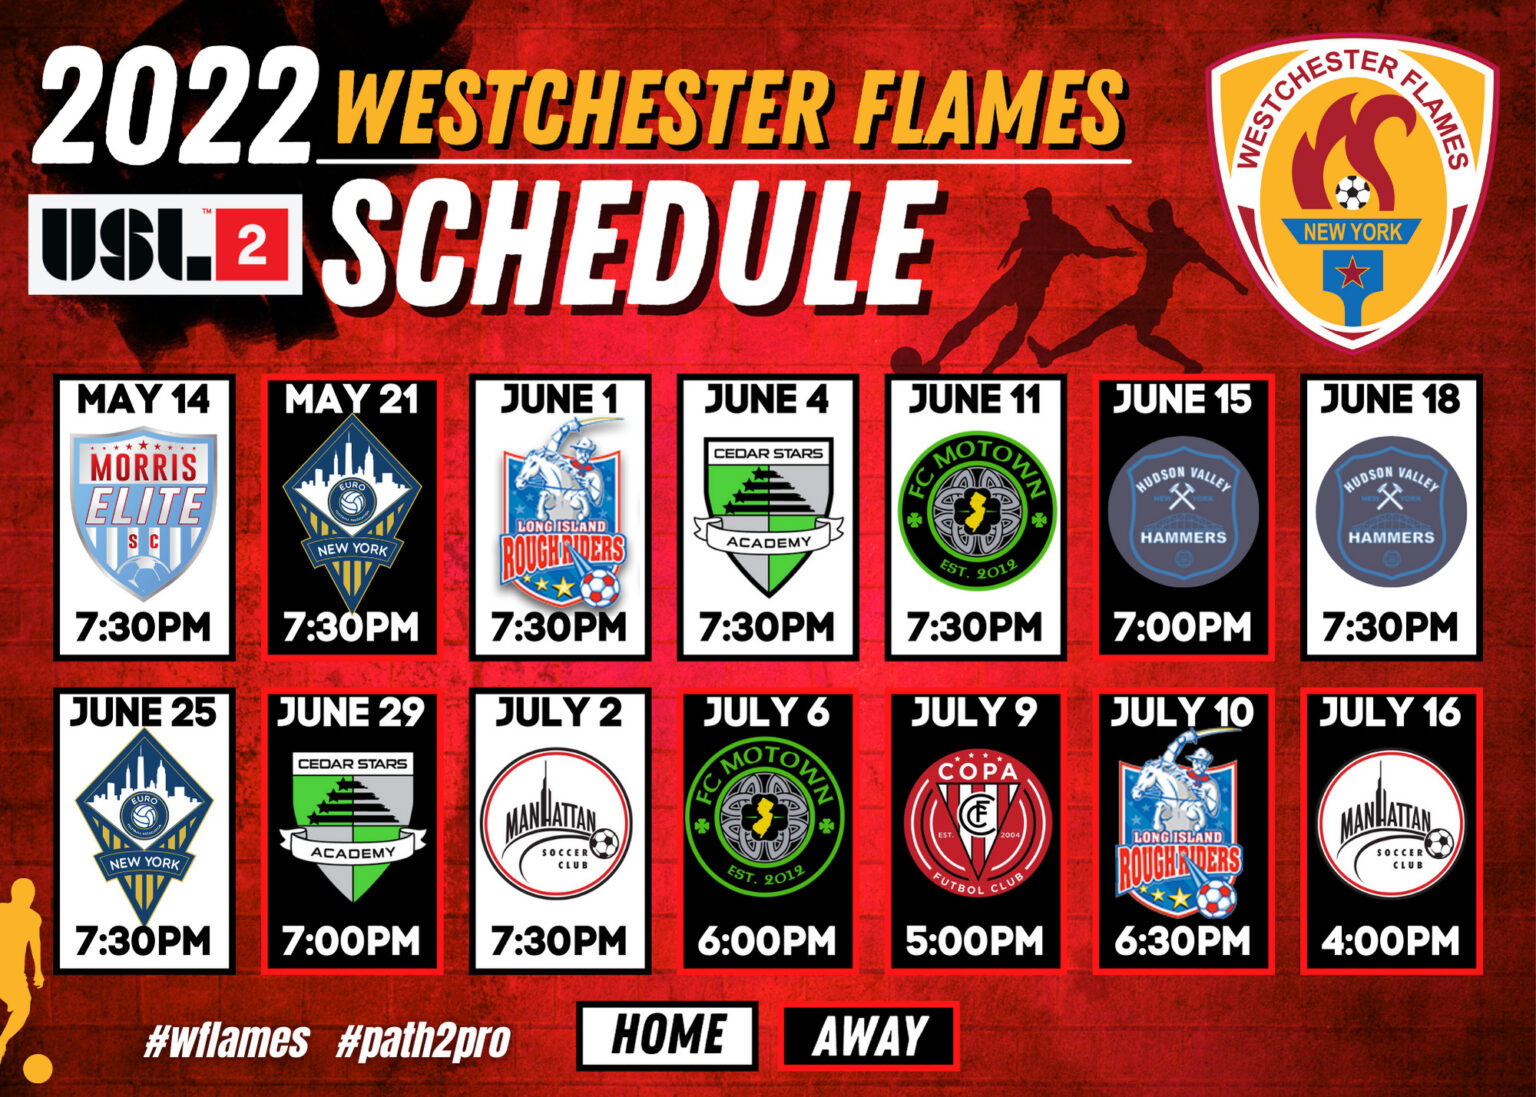 USL 2 Team Westchester Flames